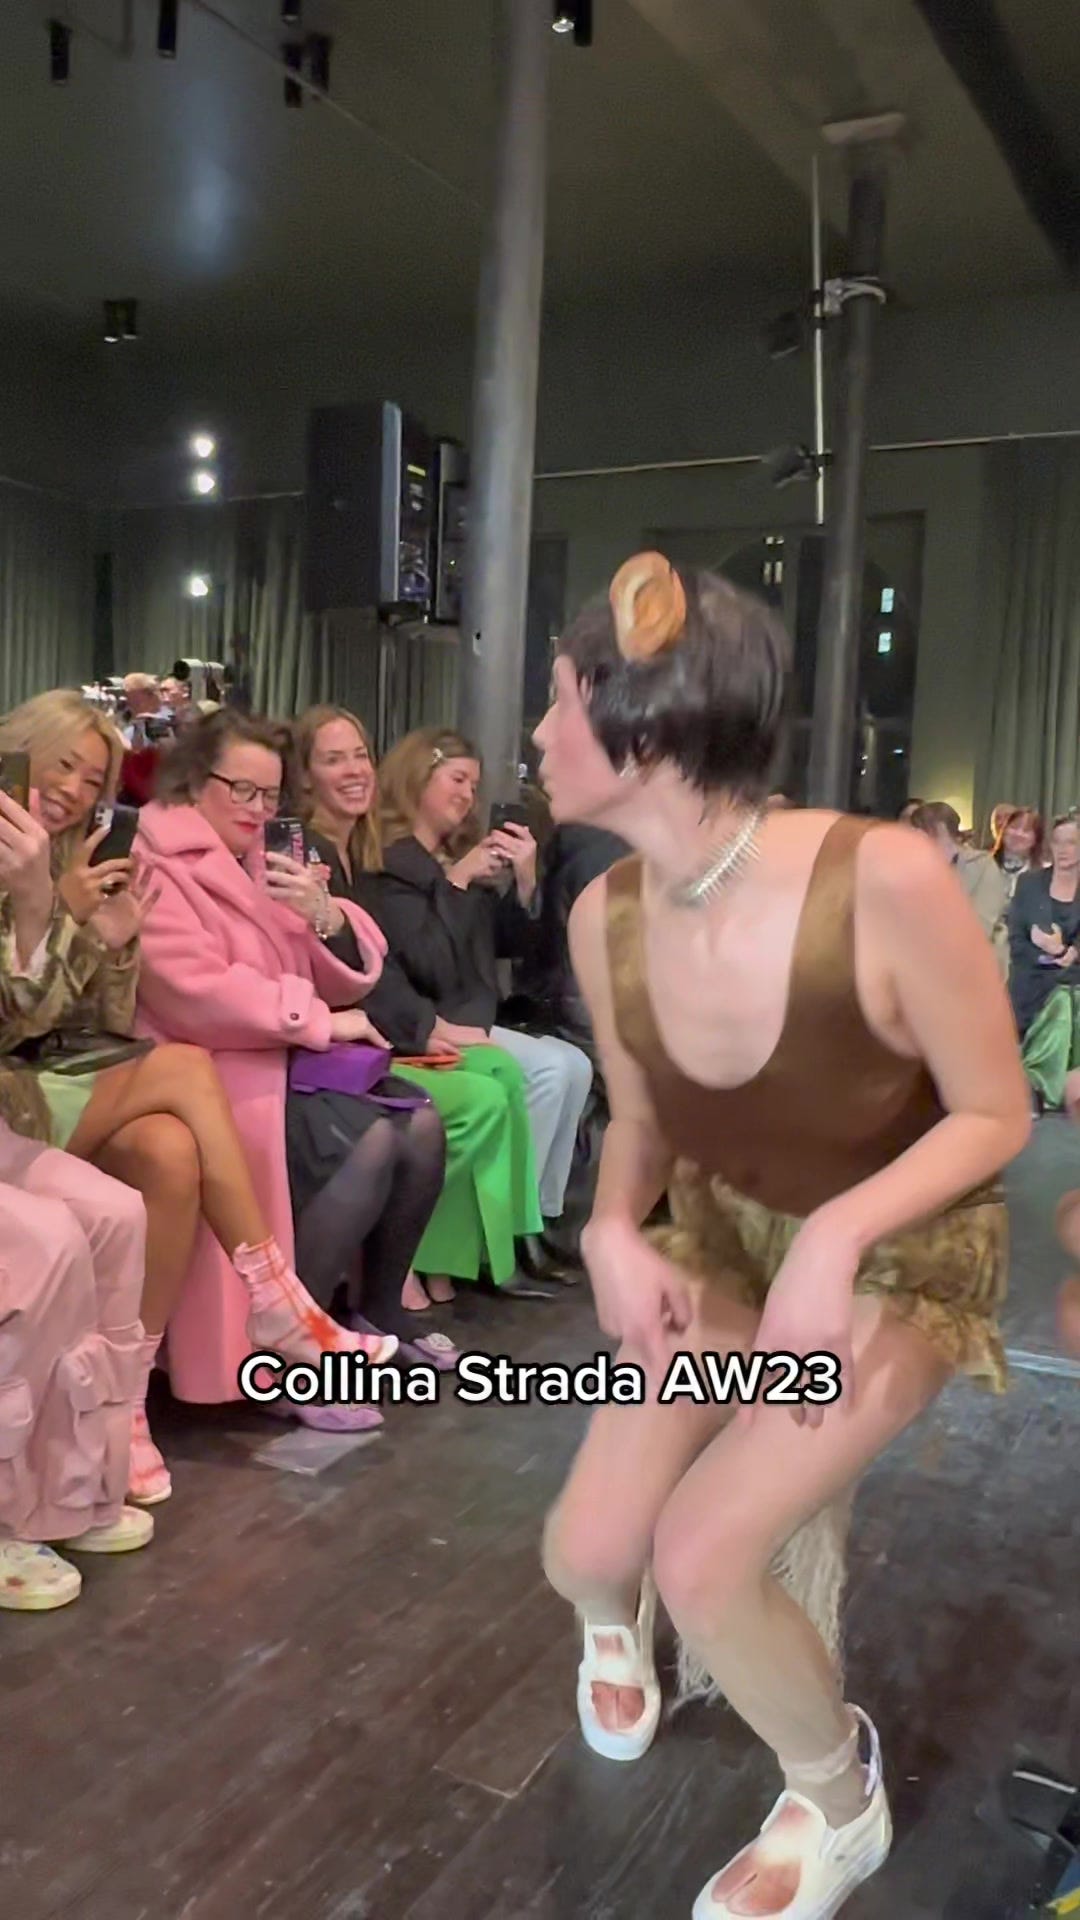 Calvin Klein just overtook Victoria's Secret as the coolest lingerie brand